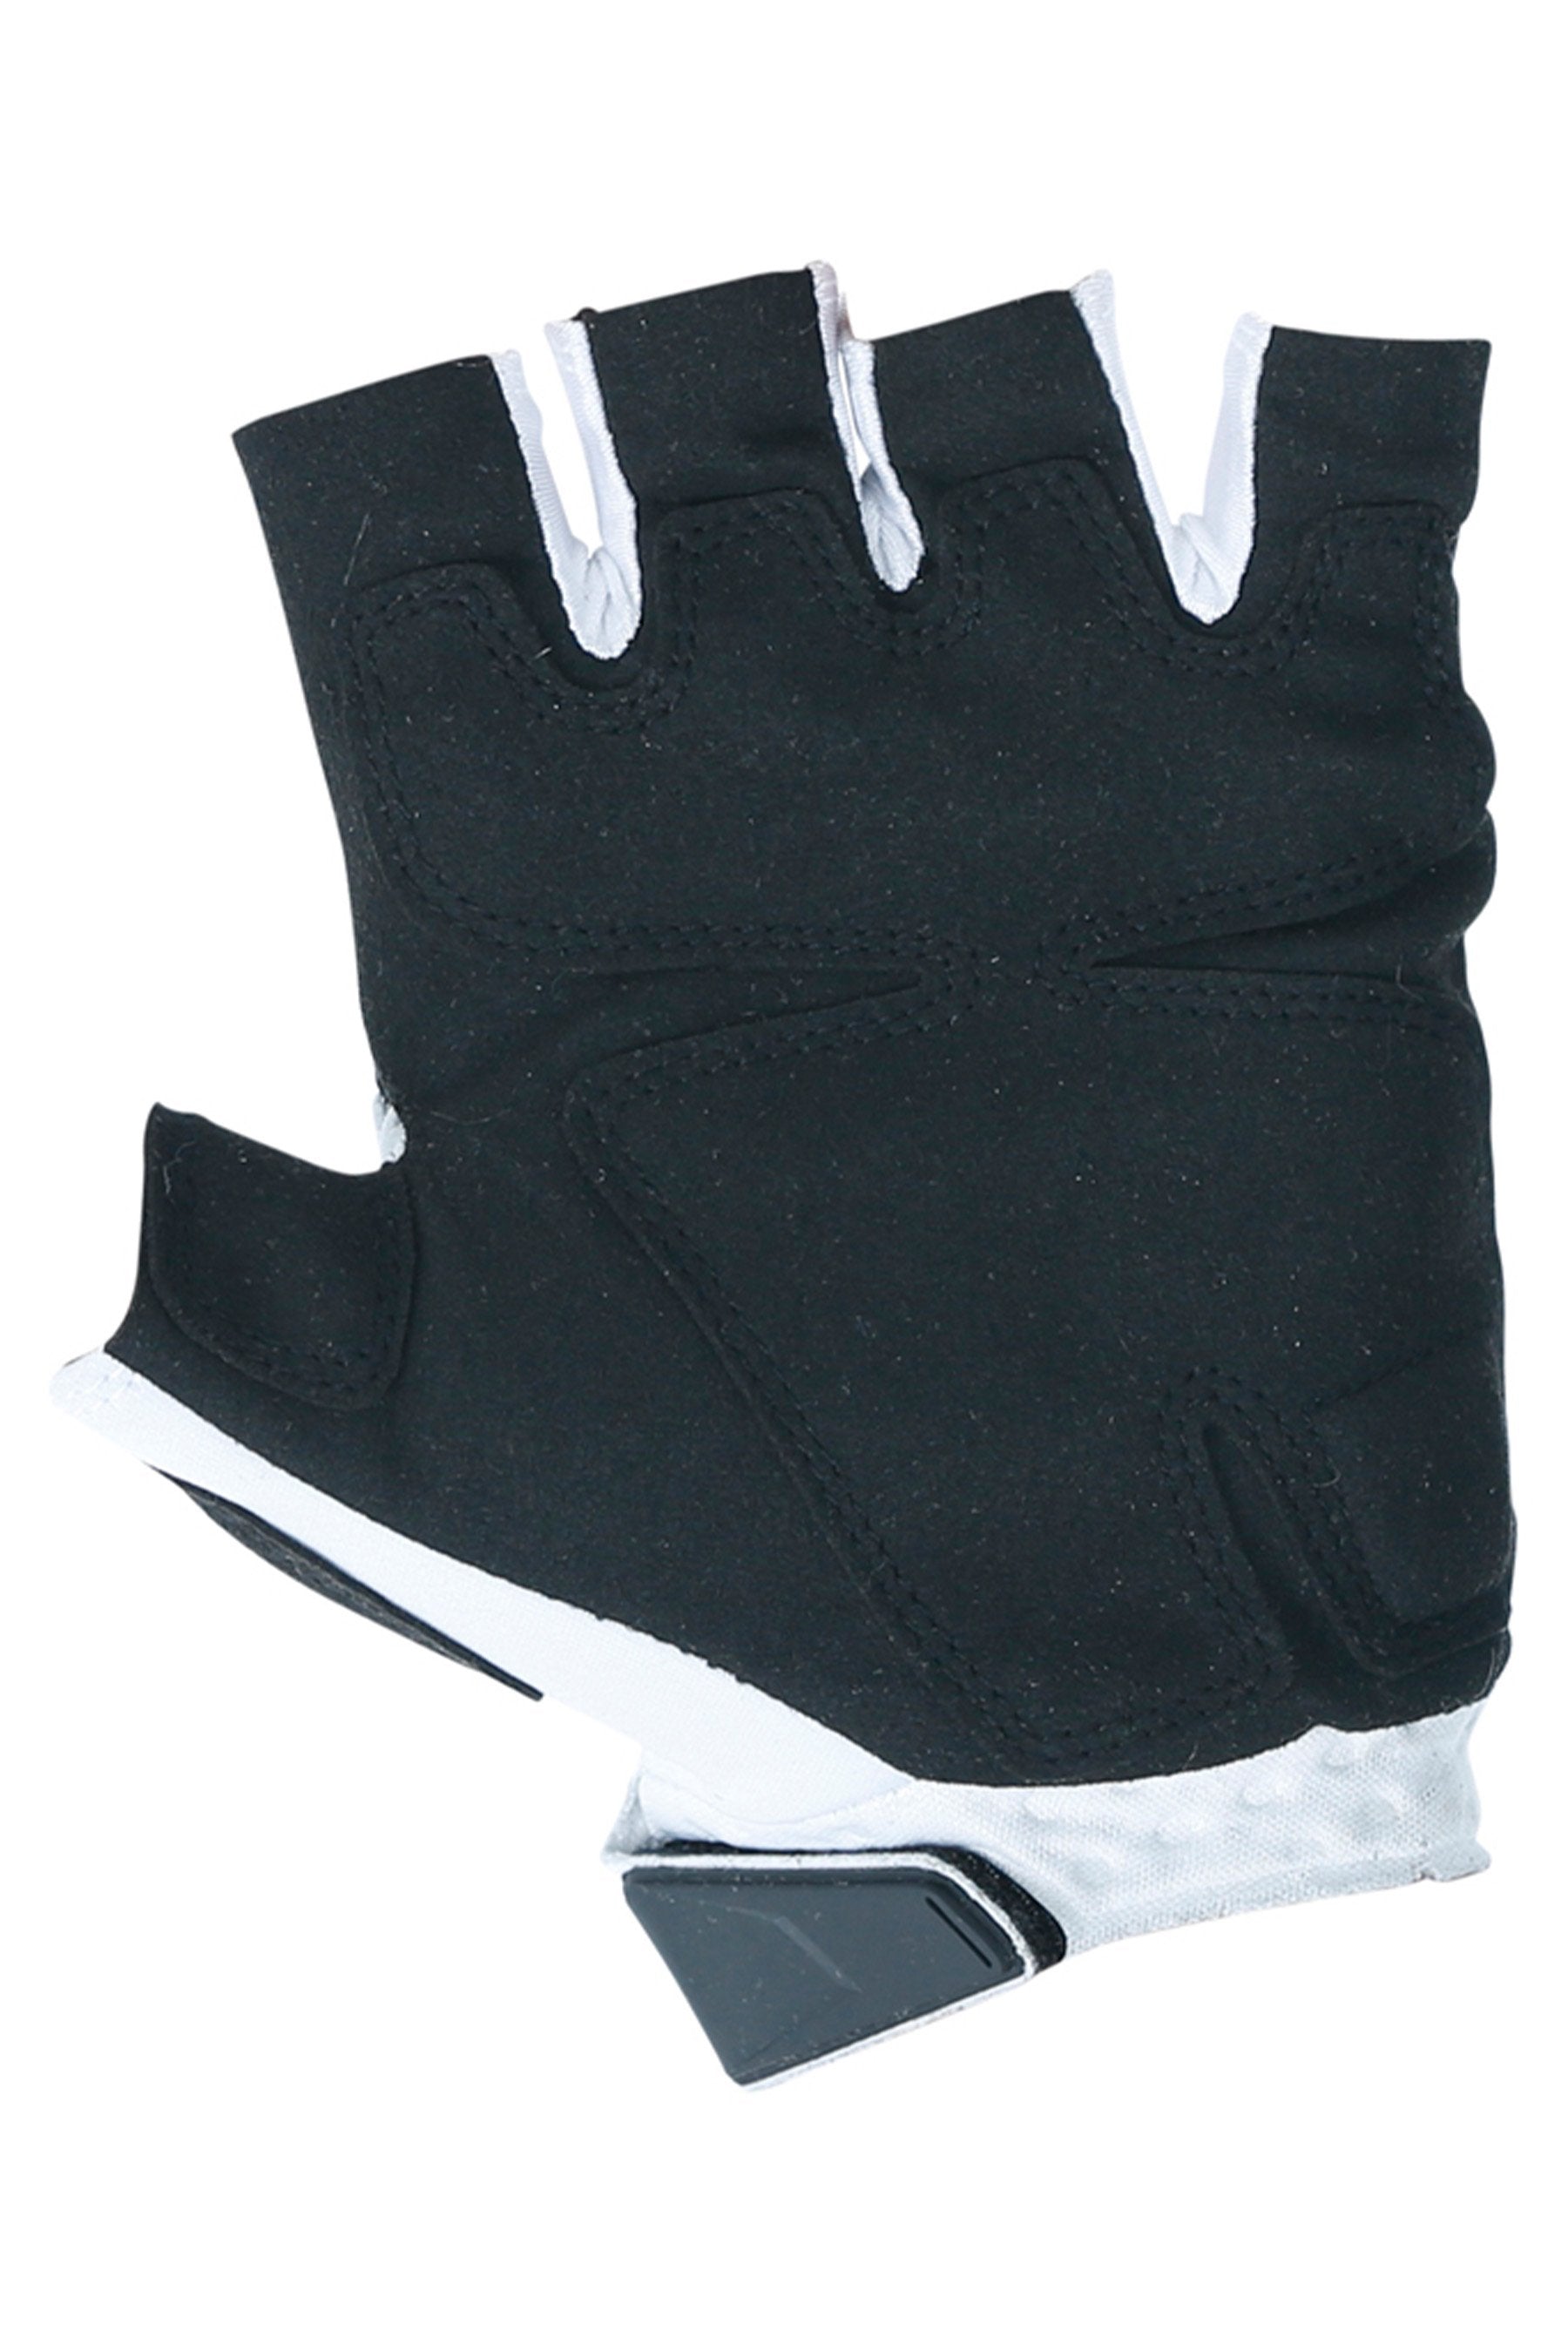 Jetpilot Rx Short Finger Race Glove - White Black